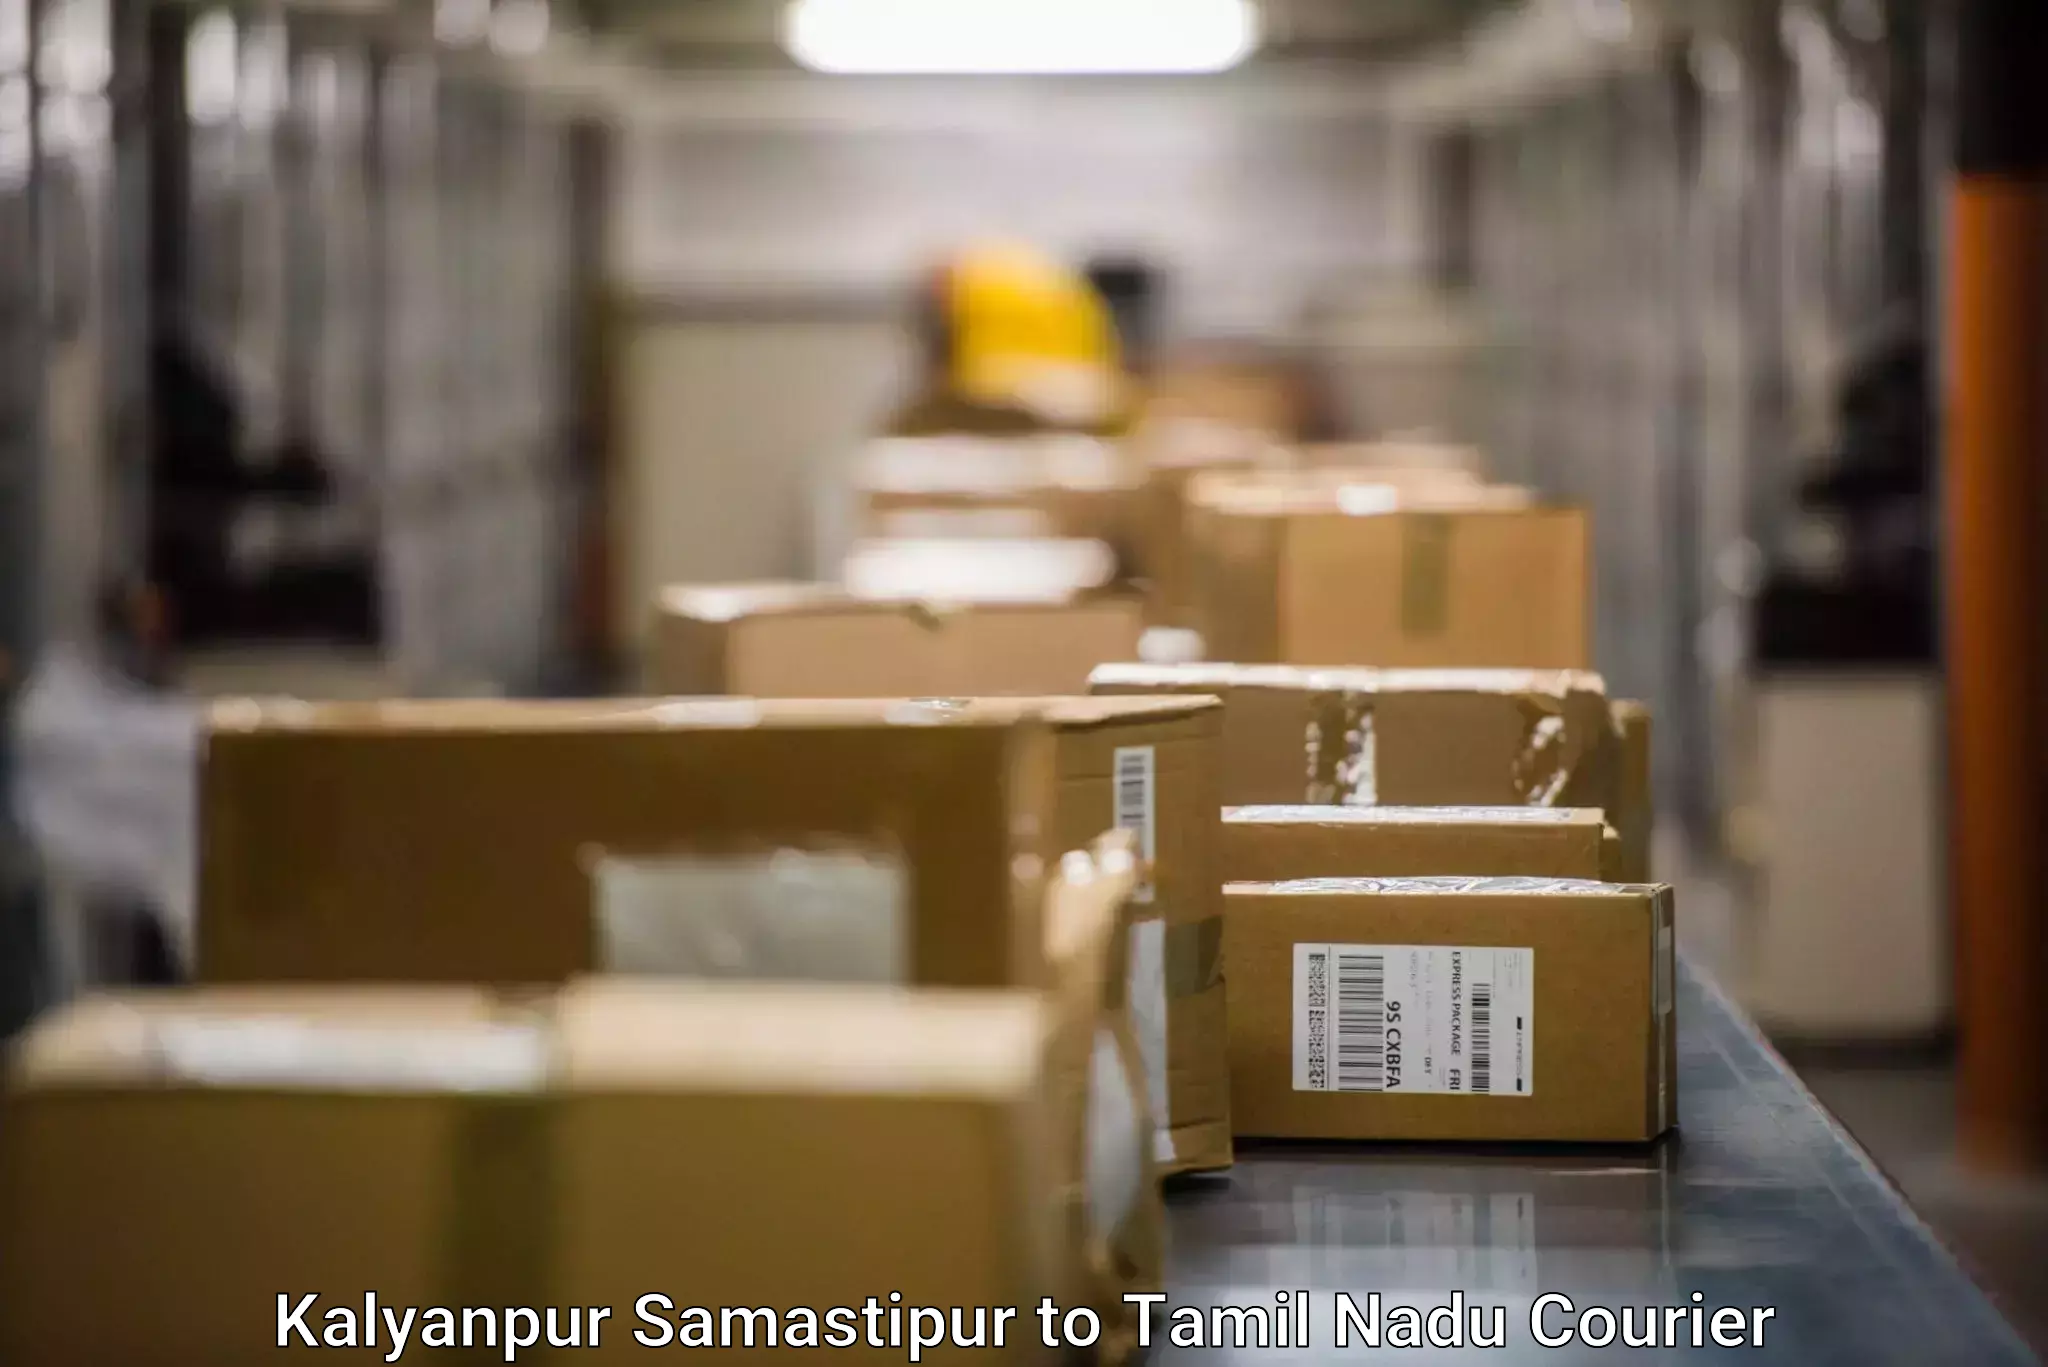 Courier service partnerships Kalyanpur Samastipur to Tamil Nadu